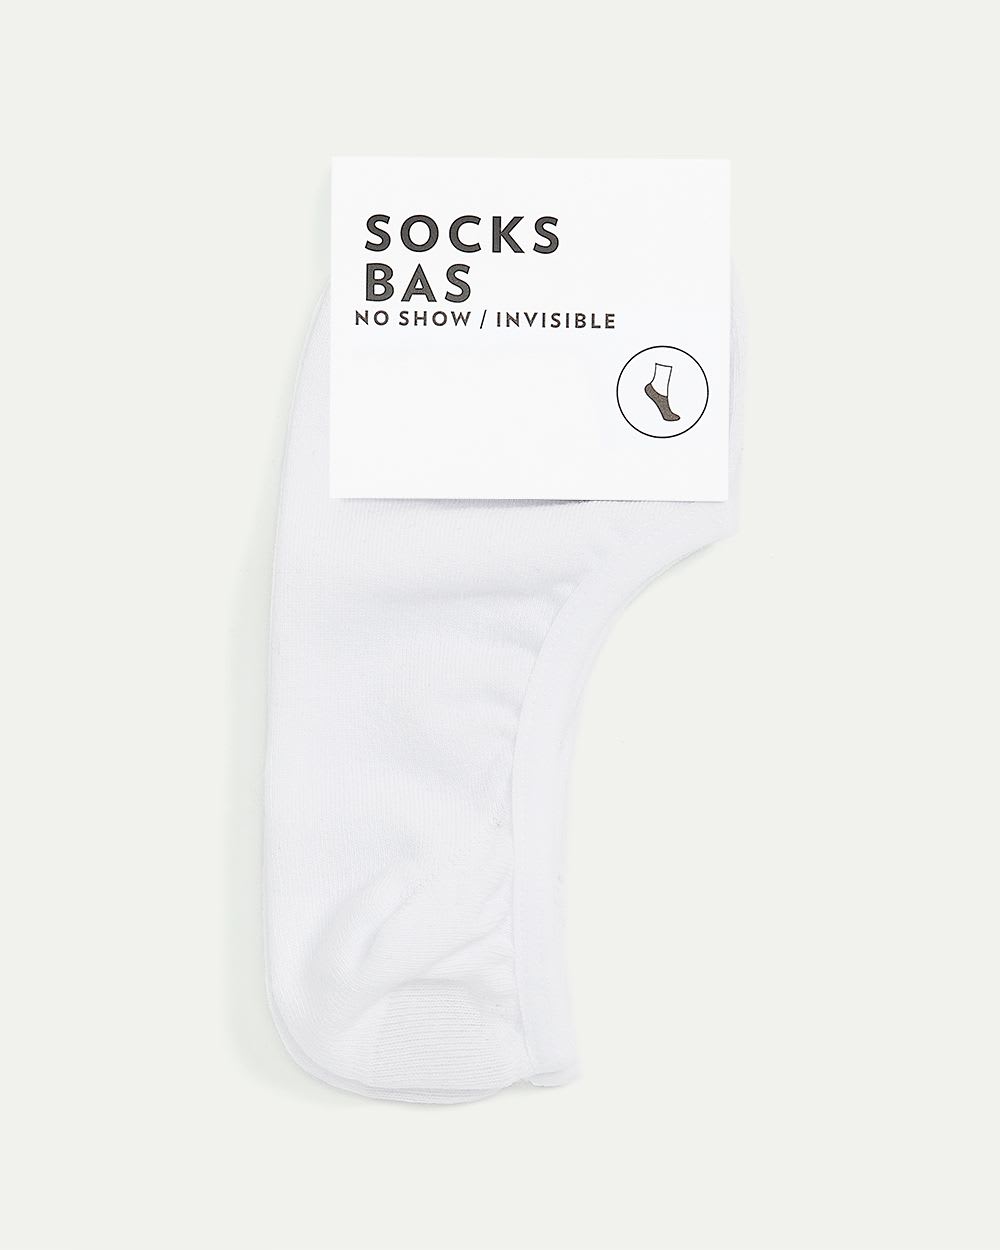 Black and White No-Show Socks, set of 1